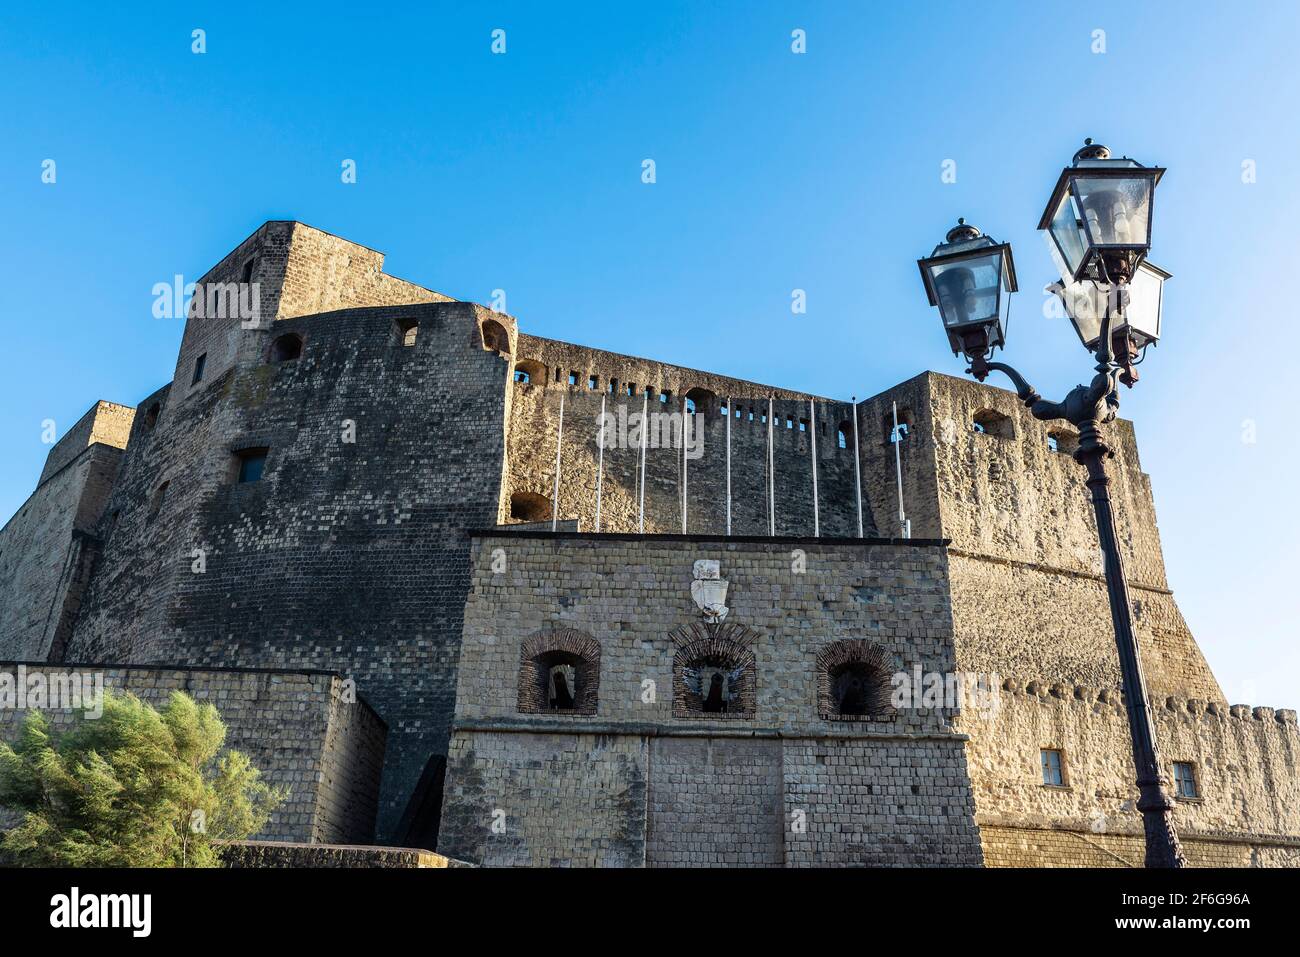 Fassade des Castel dell'Ovo (Egg Castle) am Golf von Neapel, Italien Stockfoto